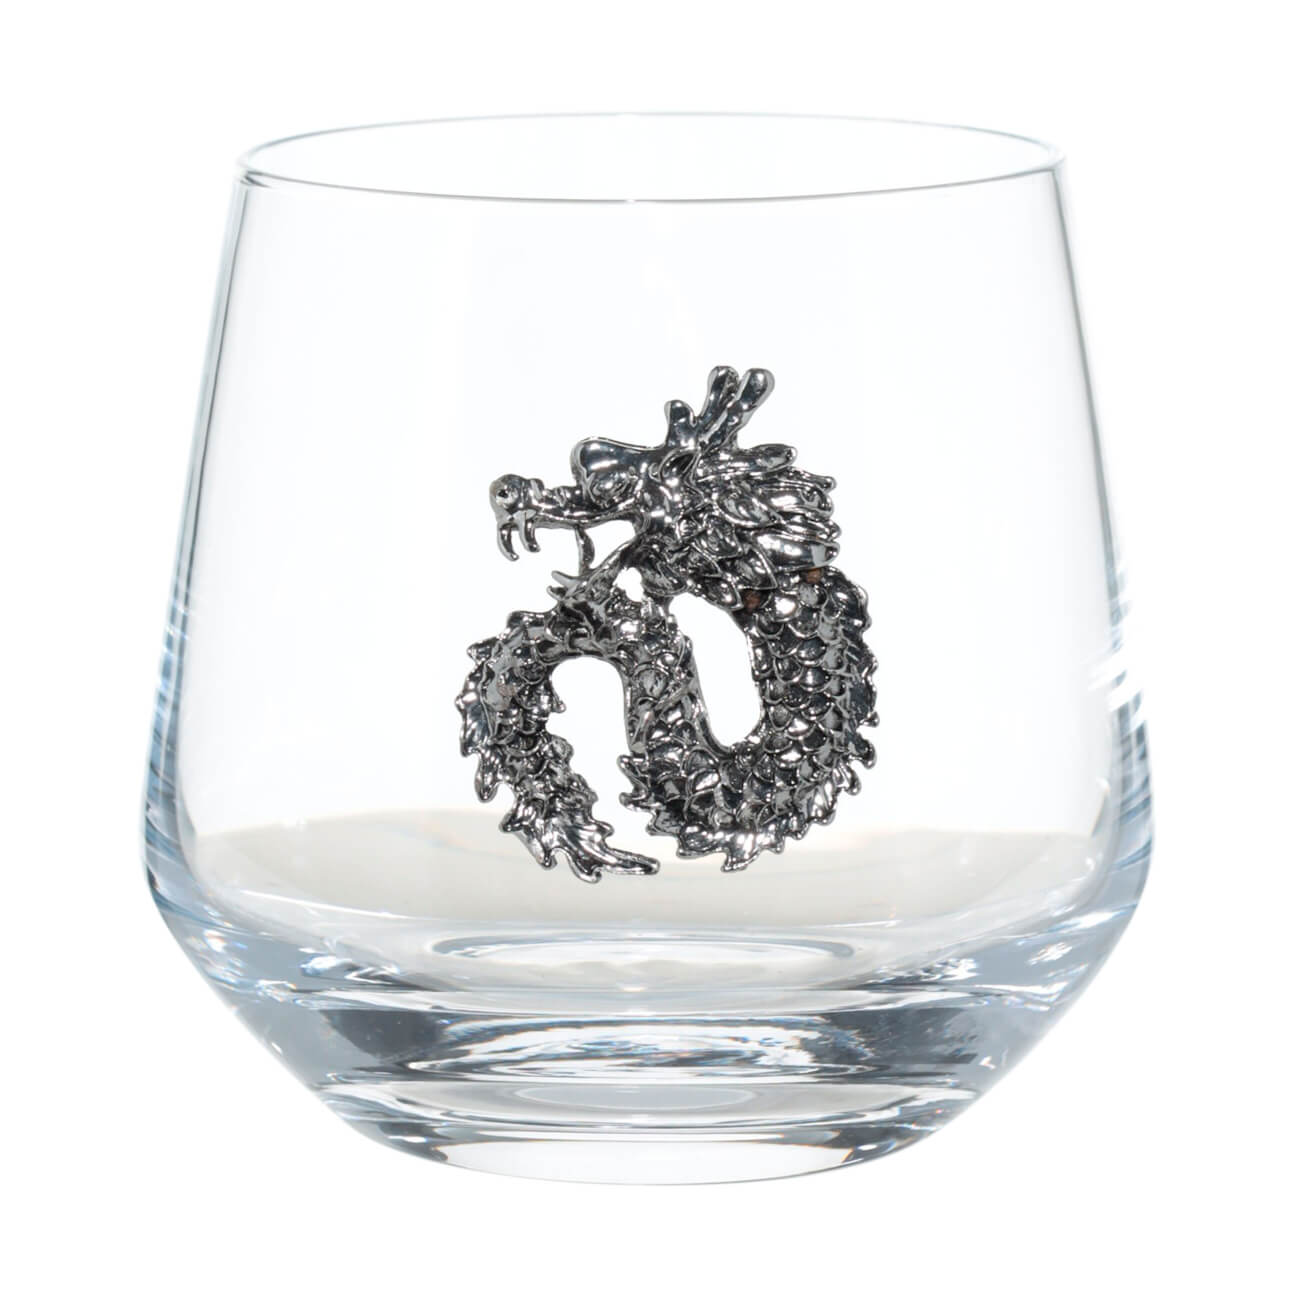 Стакан для виски, 370 мл, стекло/металл, Серебристый дракон, Lux elements стакан для виски большого успеха 250 мл